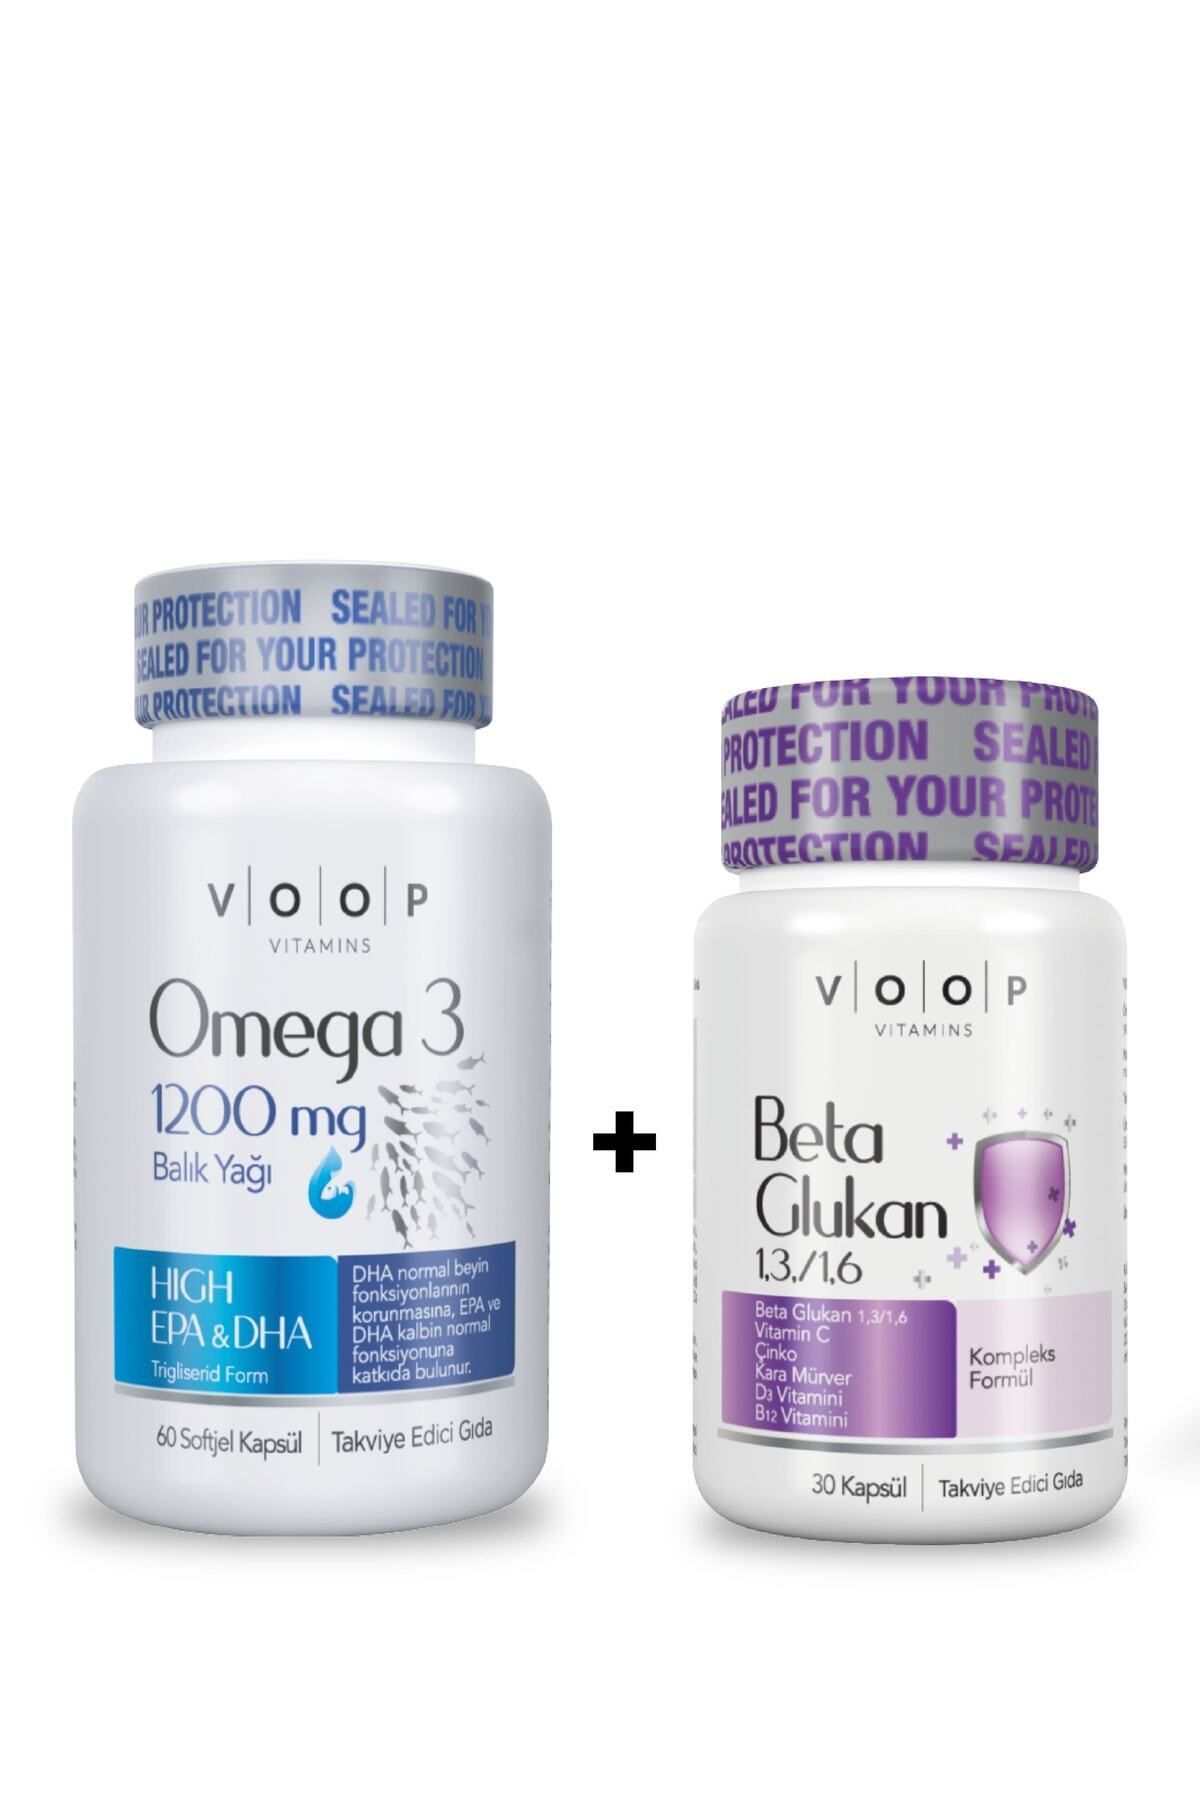 VOOP Omega 3 1200 mg 60 Kapsül + Voop Beta Glukan 1,3/1,6 Kara Mürver, Vitamin C, Çinko 30 Kapsül